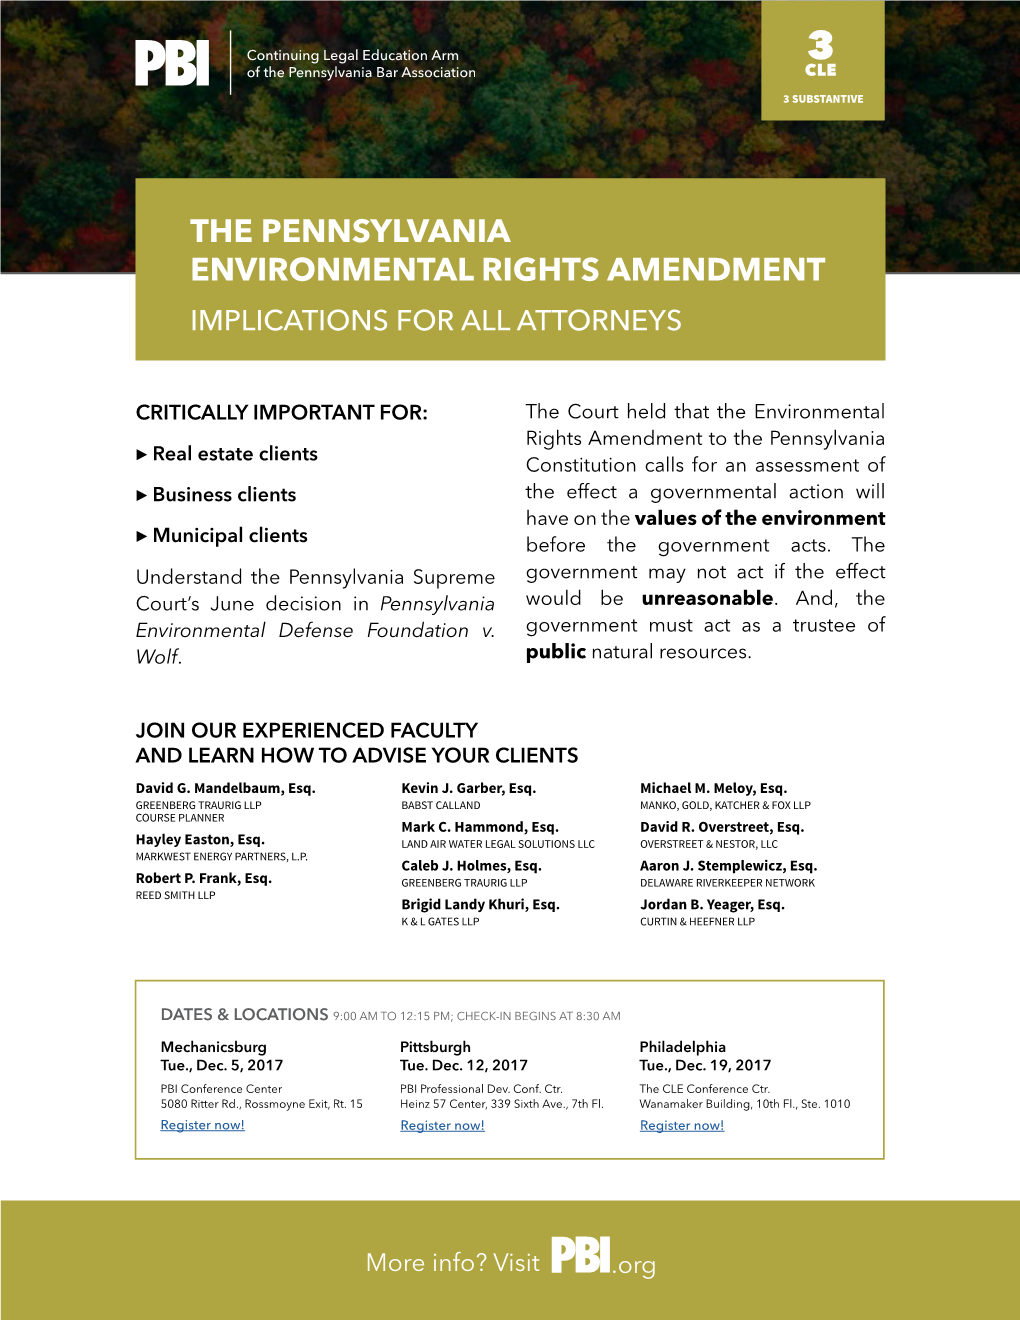 PBI PA Environmental Rights One Page.Pdf